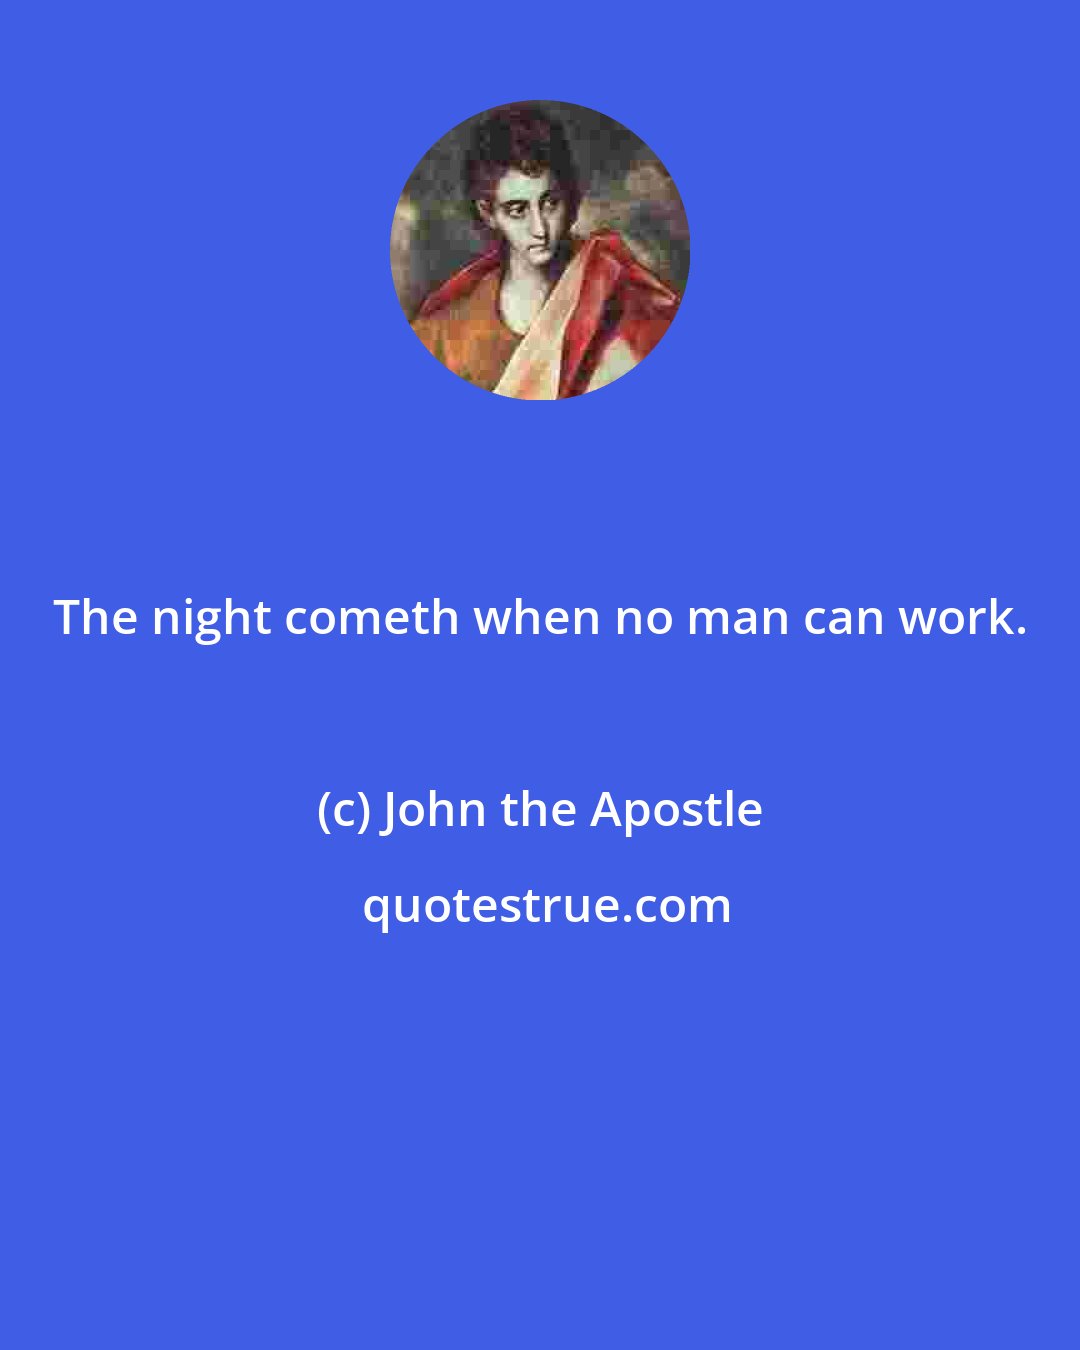 John the Apostle: The night cometh when no man can work.